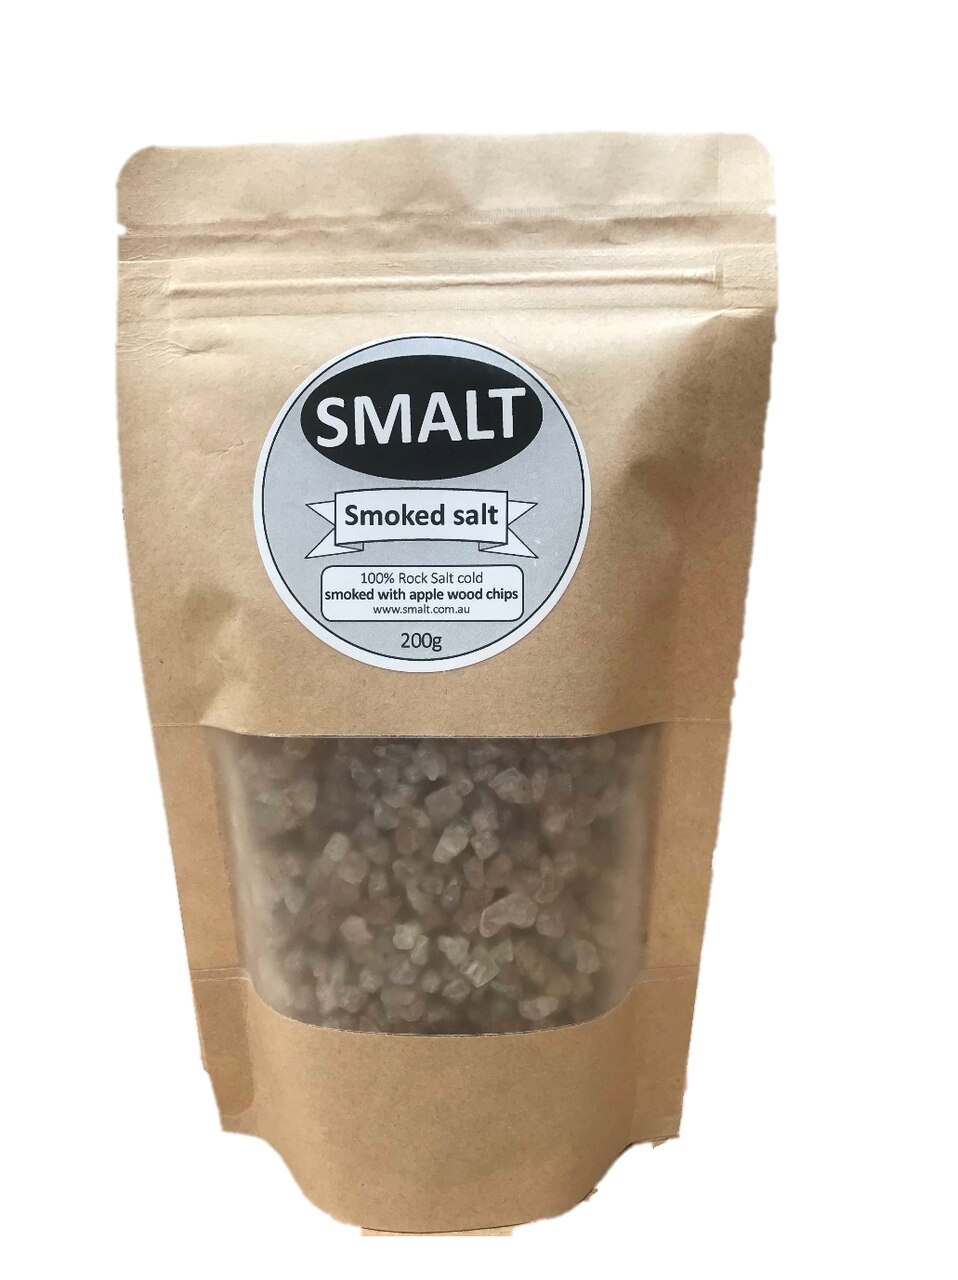 SMALT Apple Smoked Rock Salt